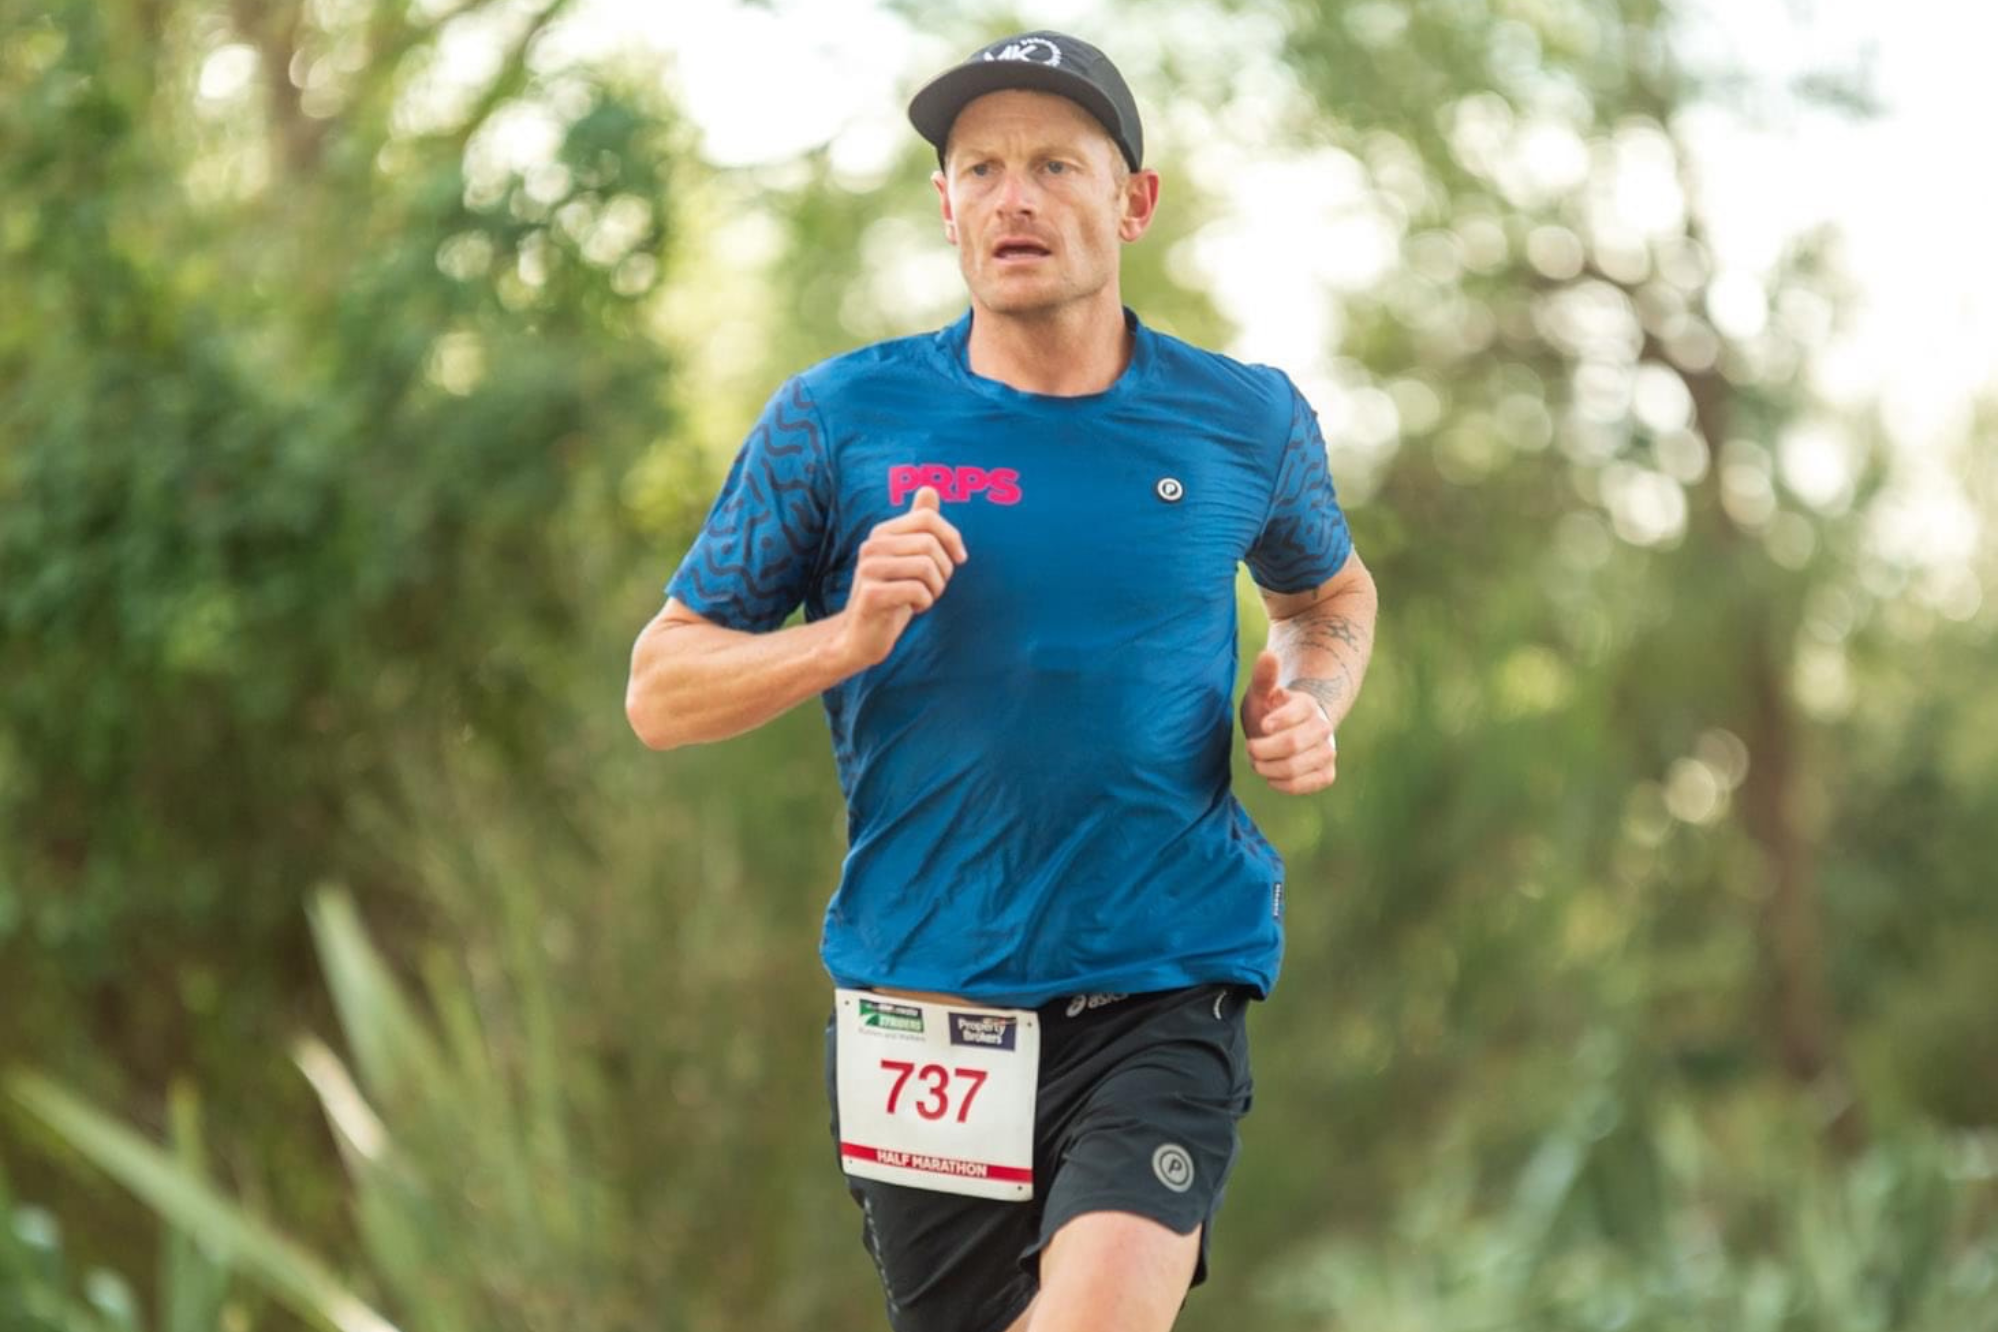 Triathlon Triumphs: Matt's Journey of Endurance and Purpose